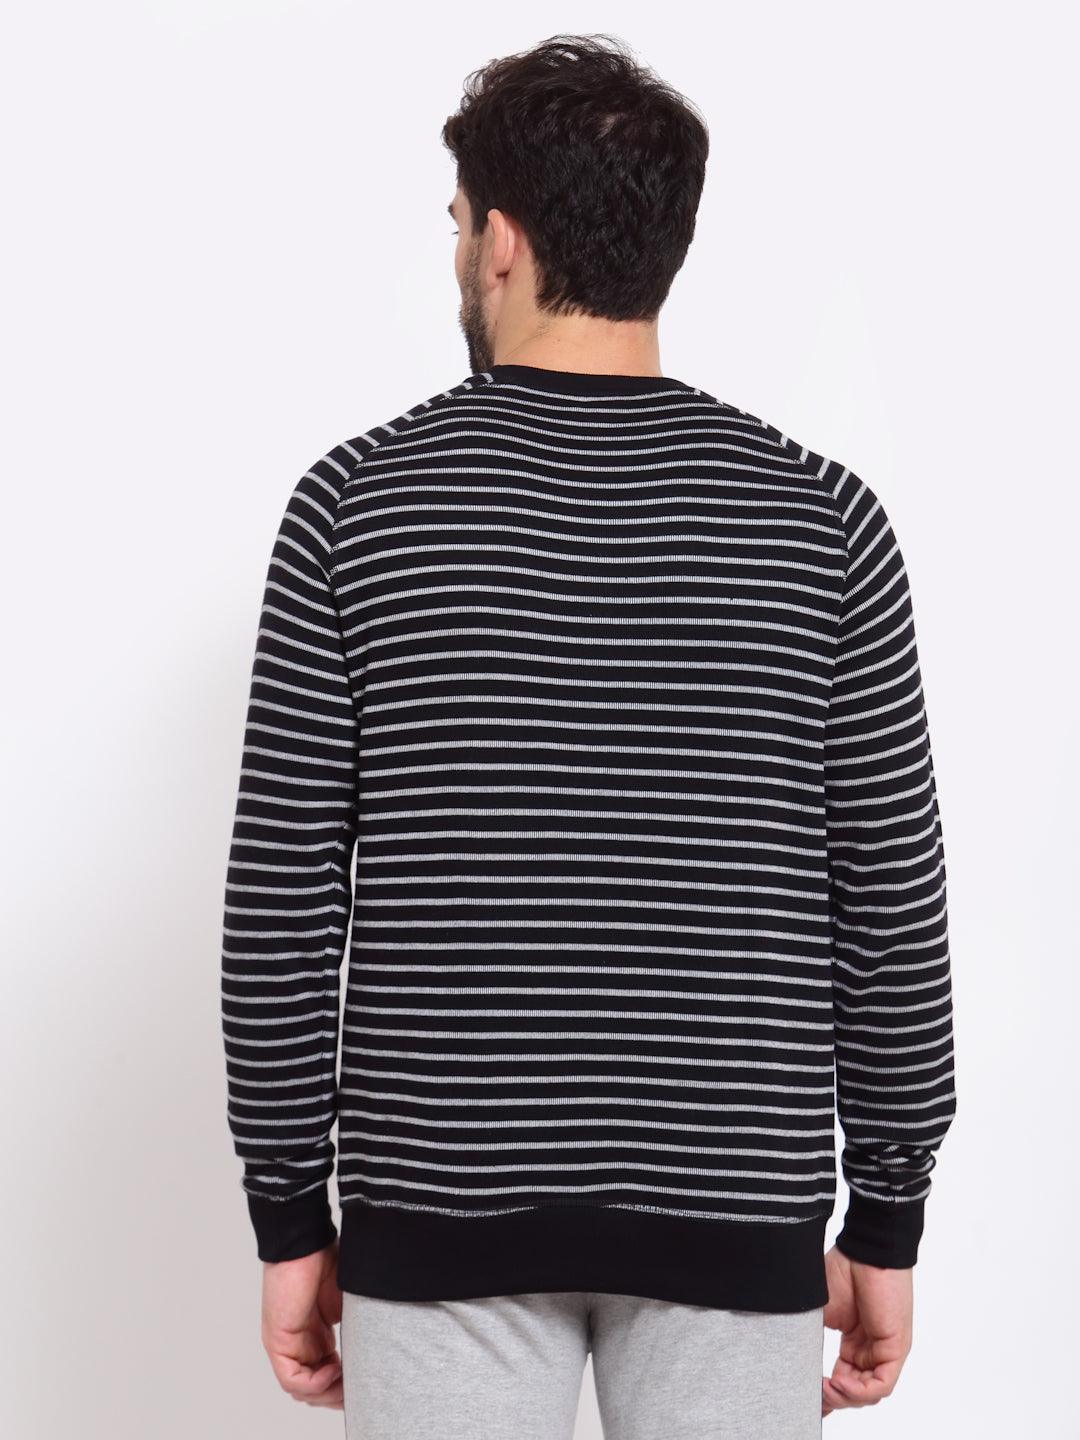 Sporto Men's Striped Sweatshirt - Black & White